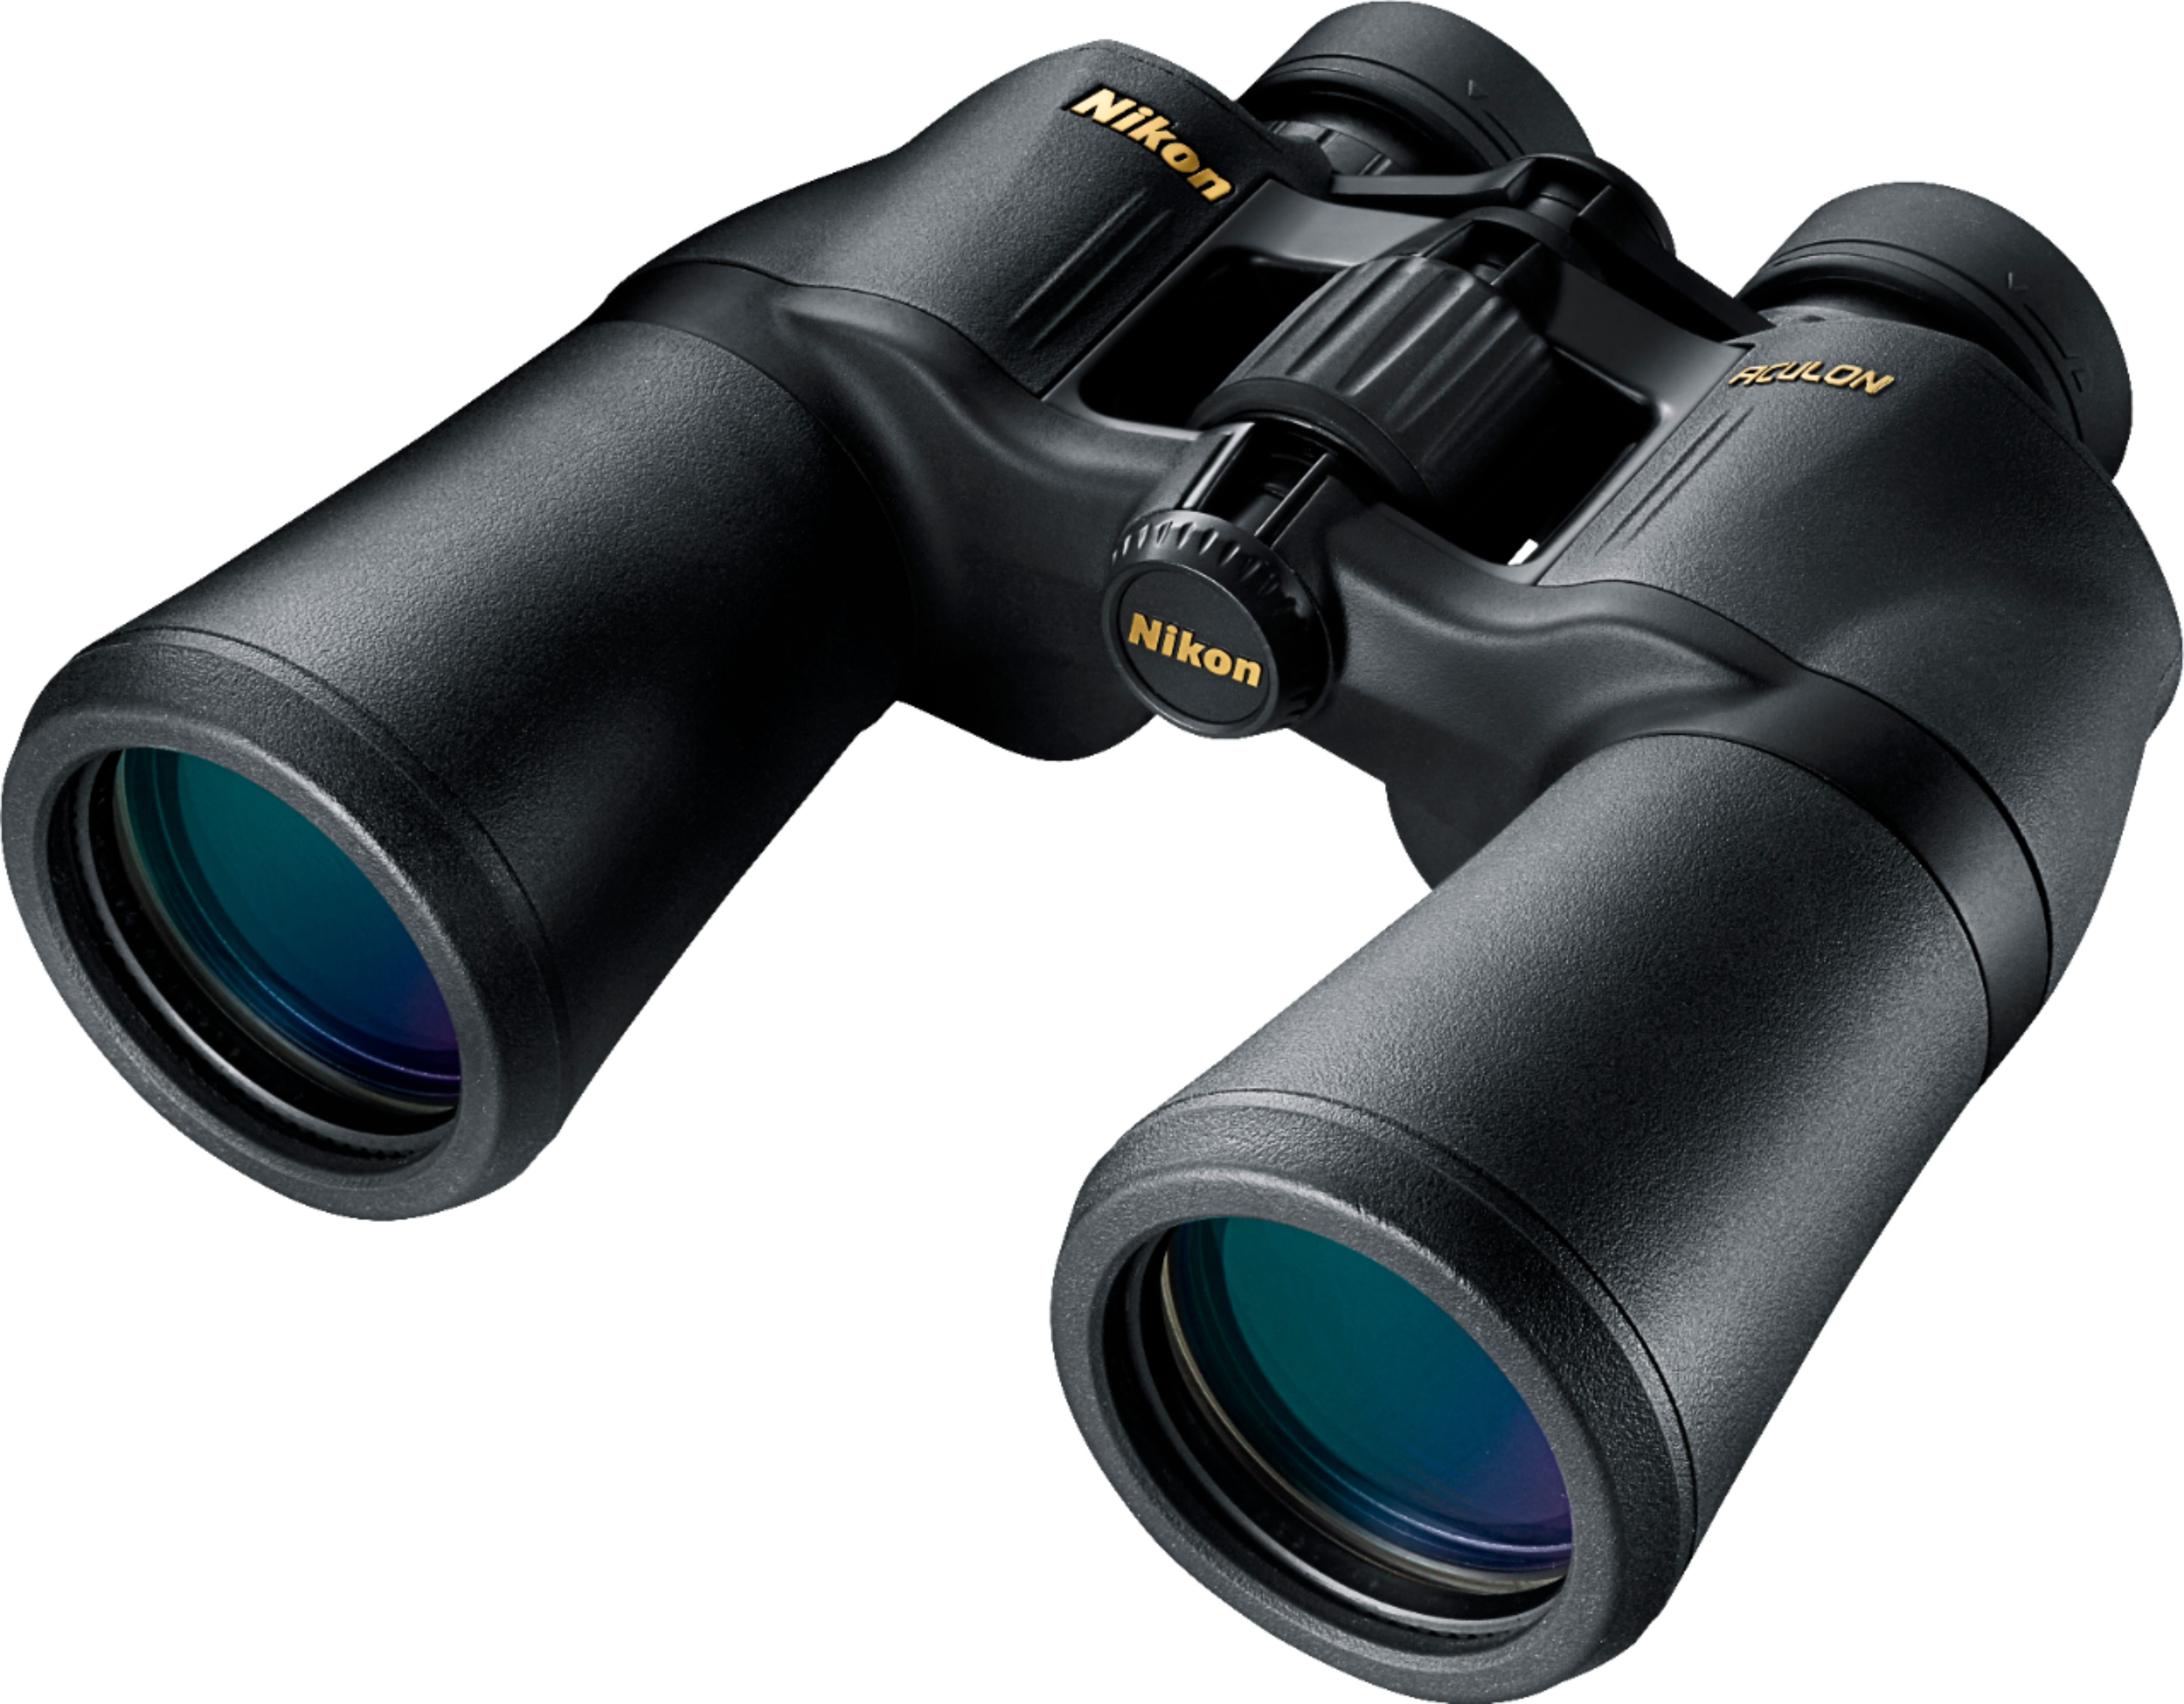 Angle View: Nikon - ACULON 10 x 50 Binoculars - Black